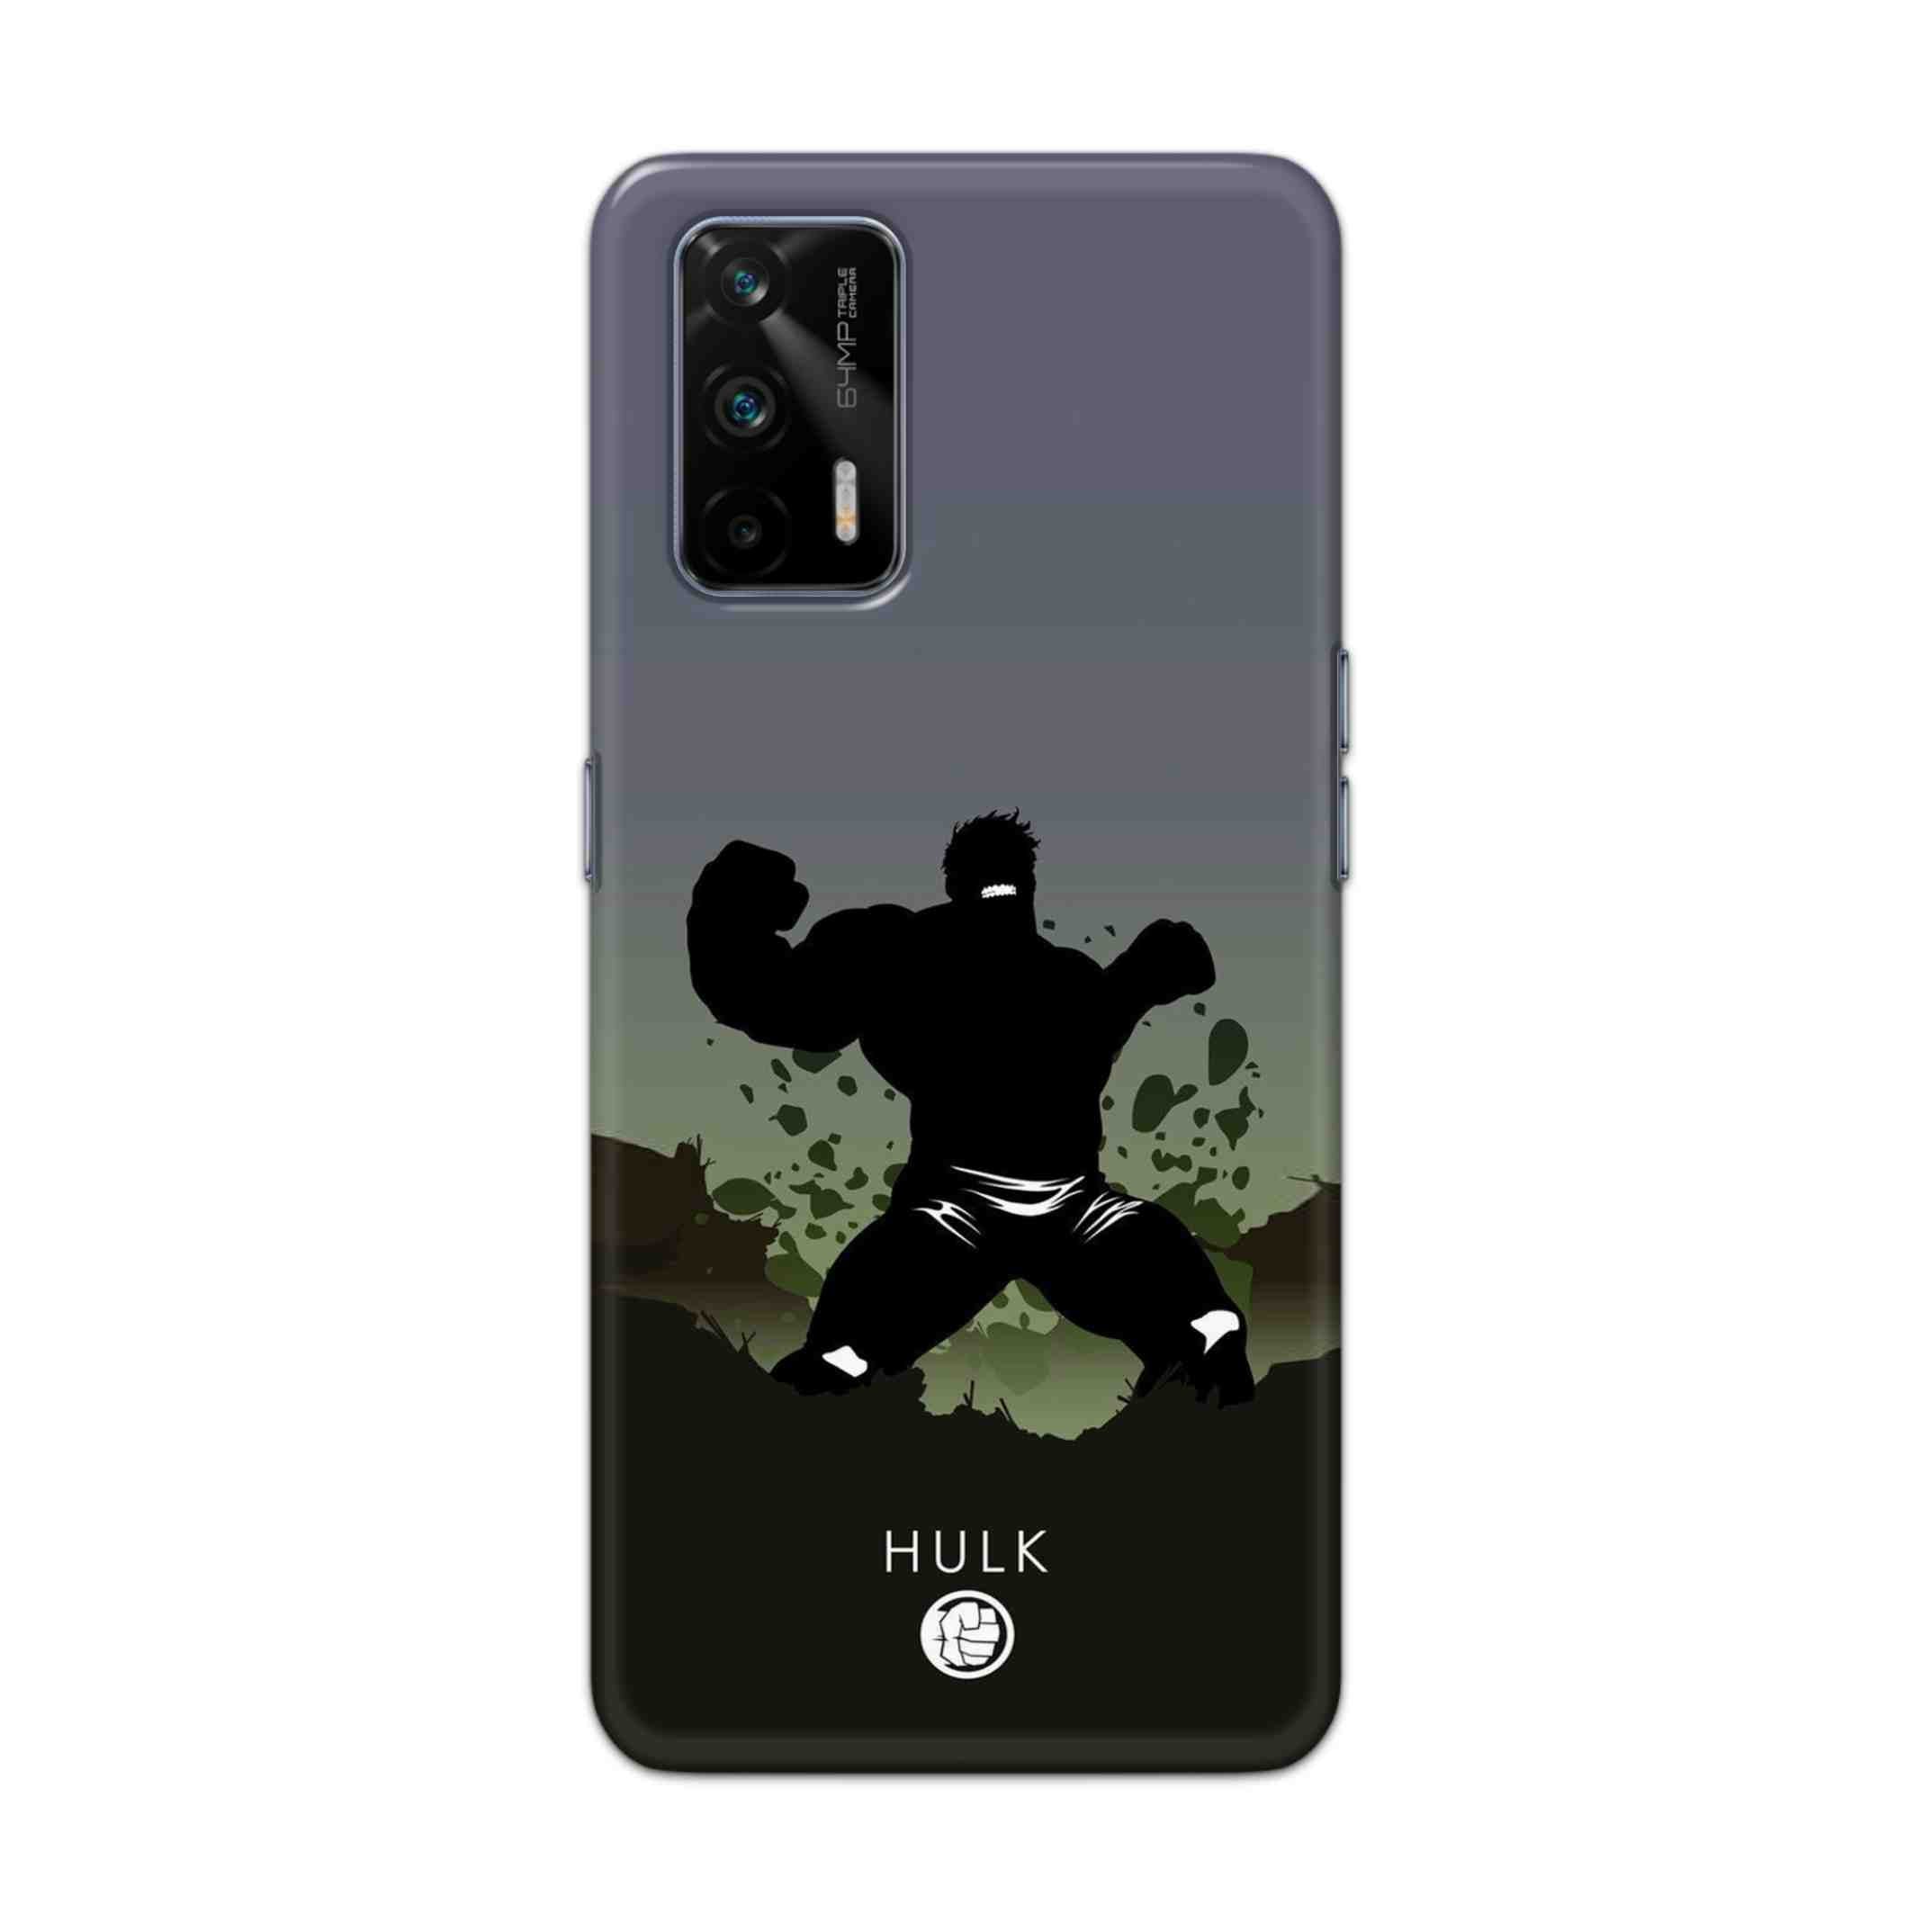 Buy Hulk Drax Hard Back Mobile Phone Case Cover For Realme GT 5G Online